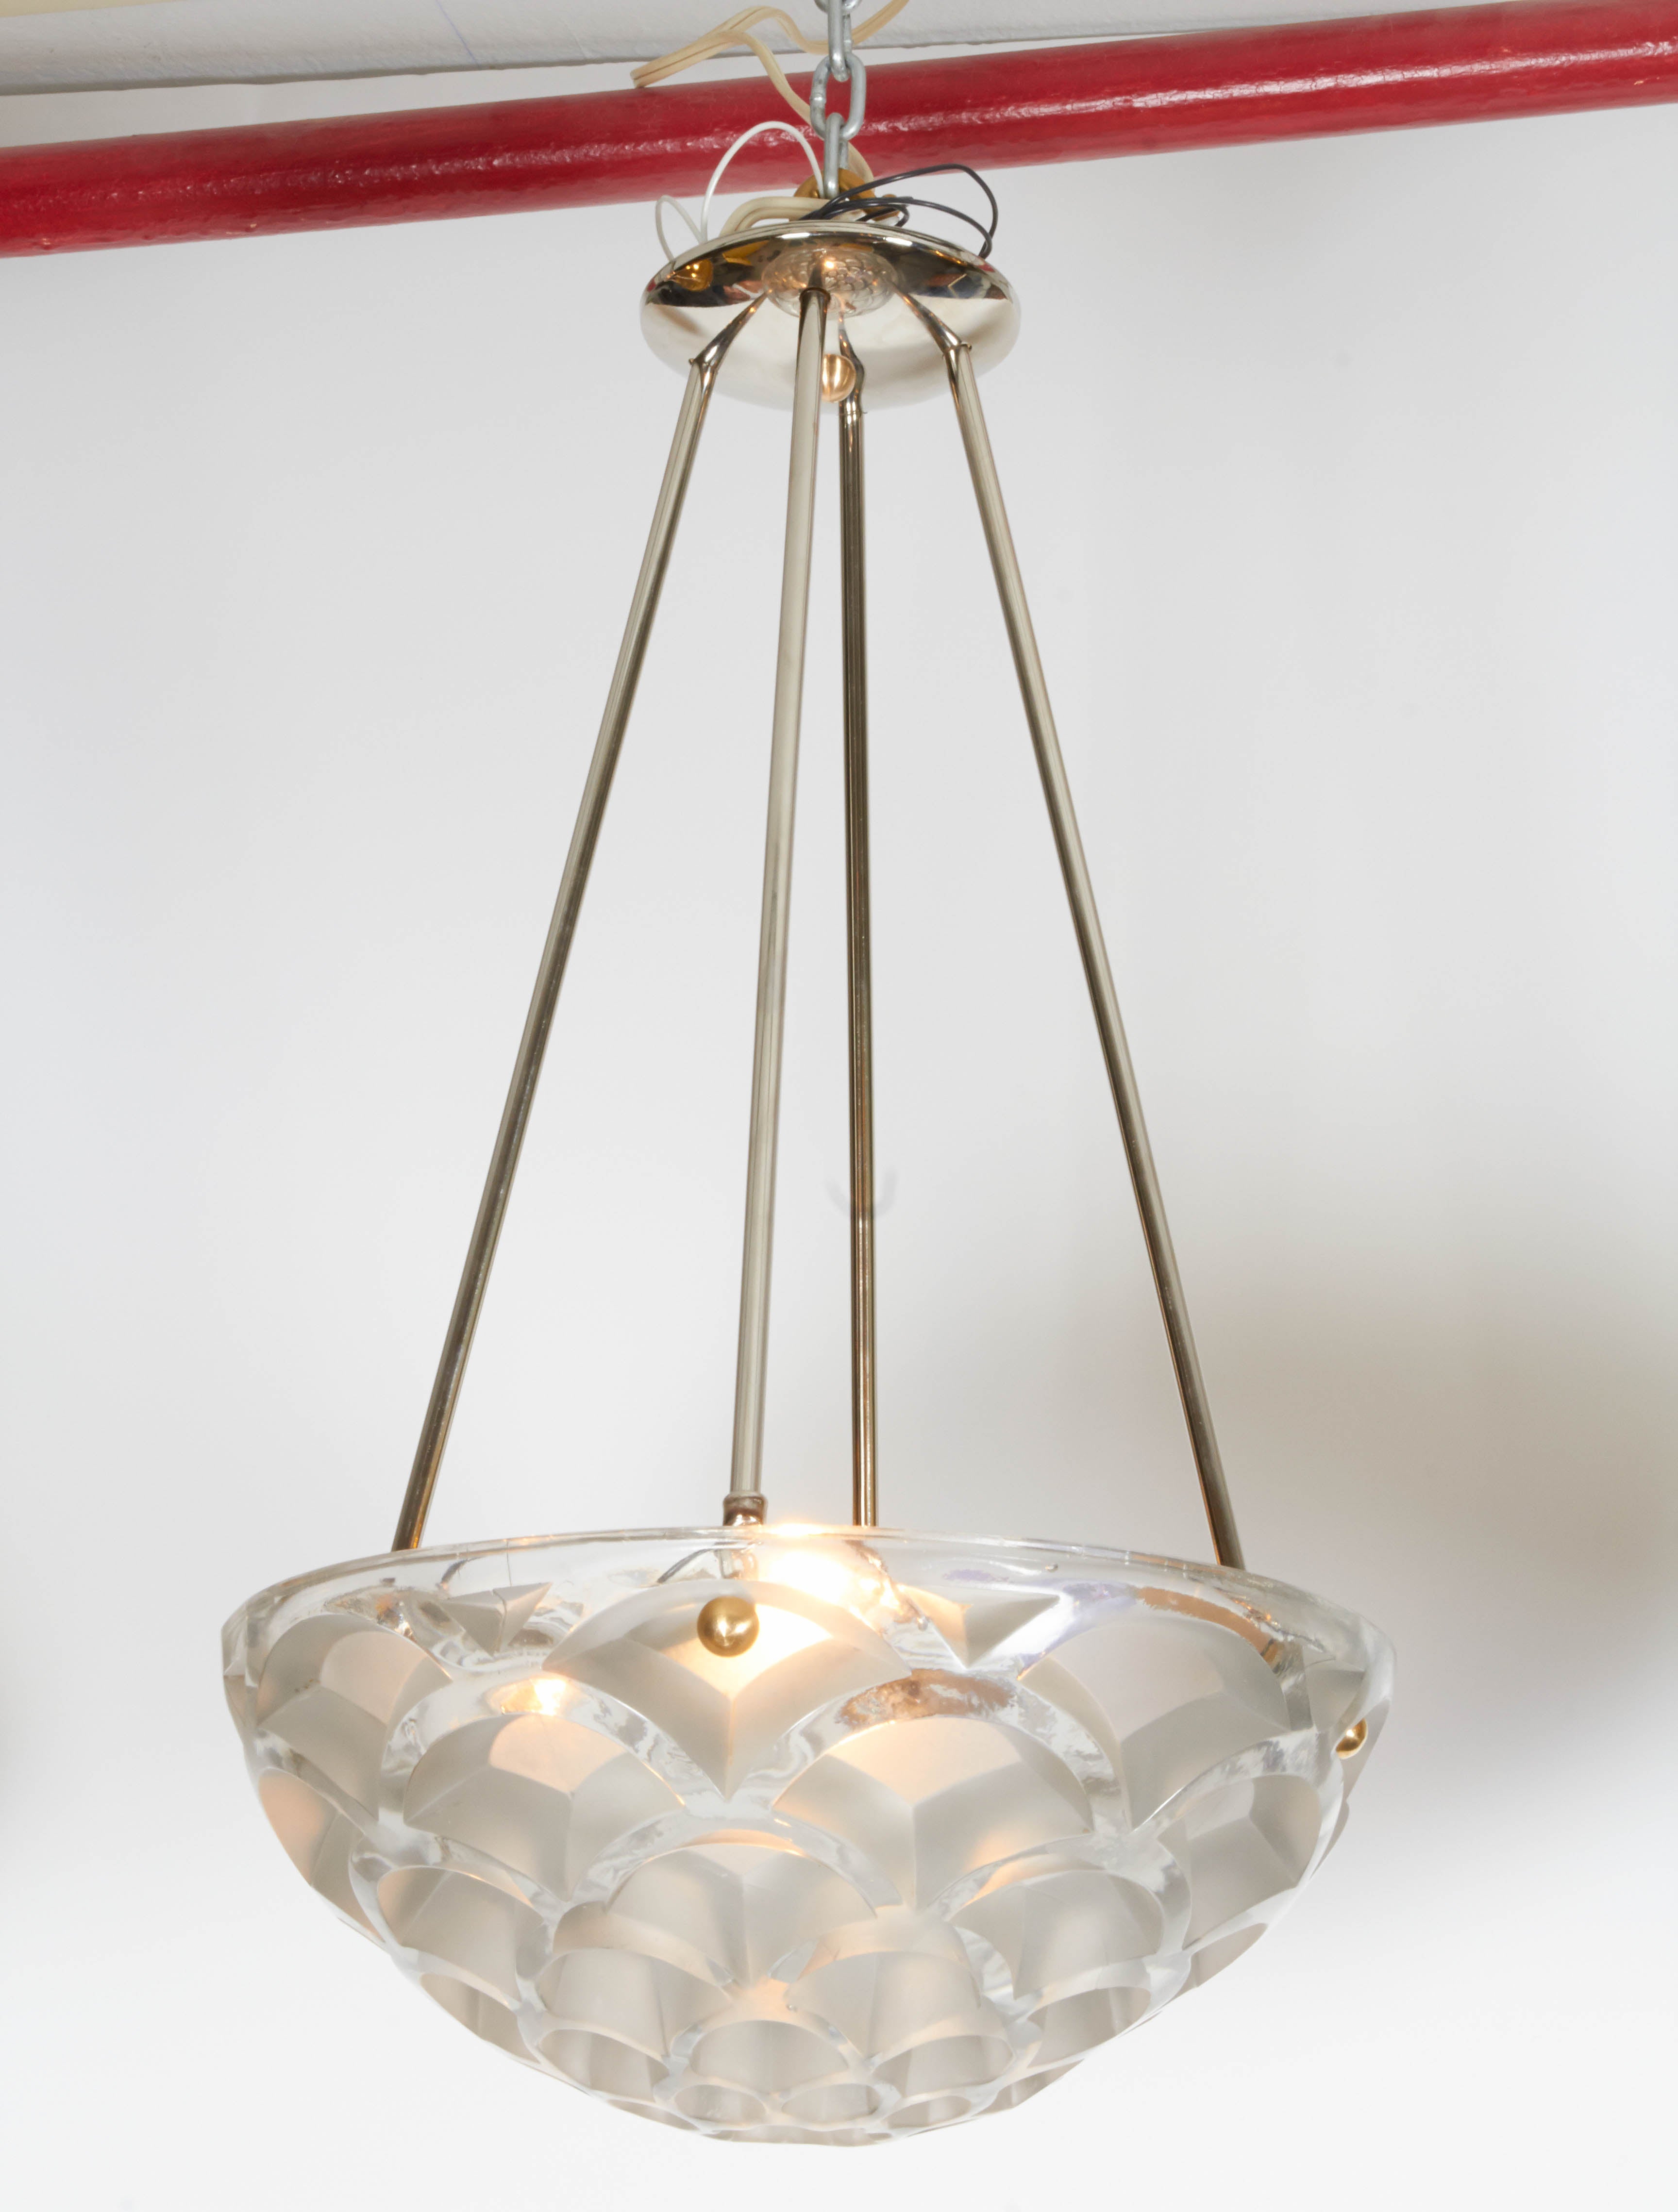 French Art Deco chandelier by René Lalique 